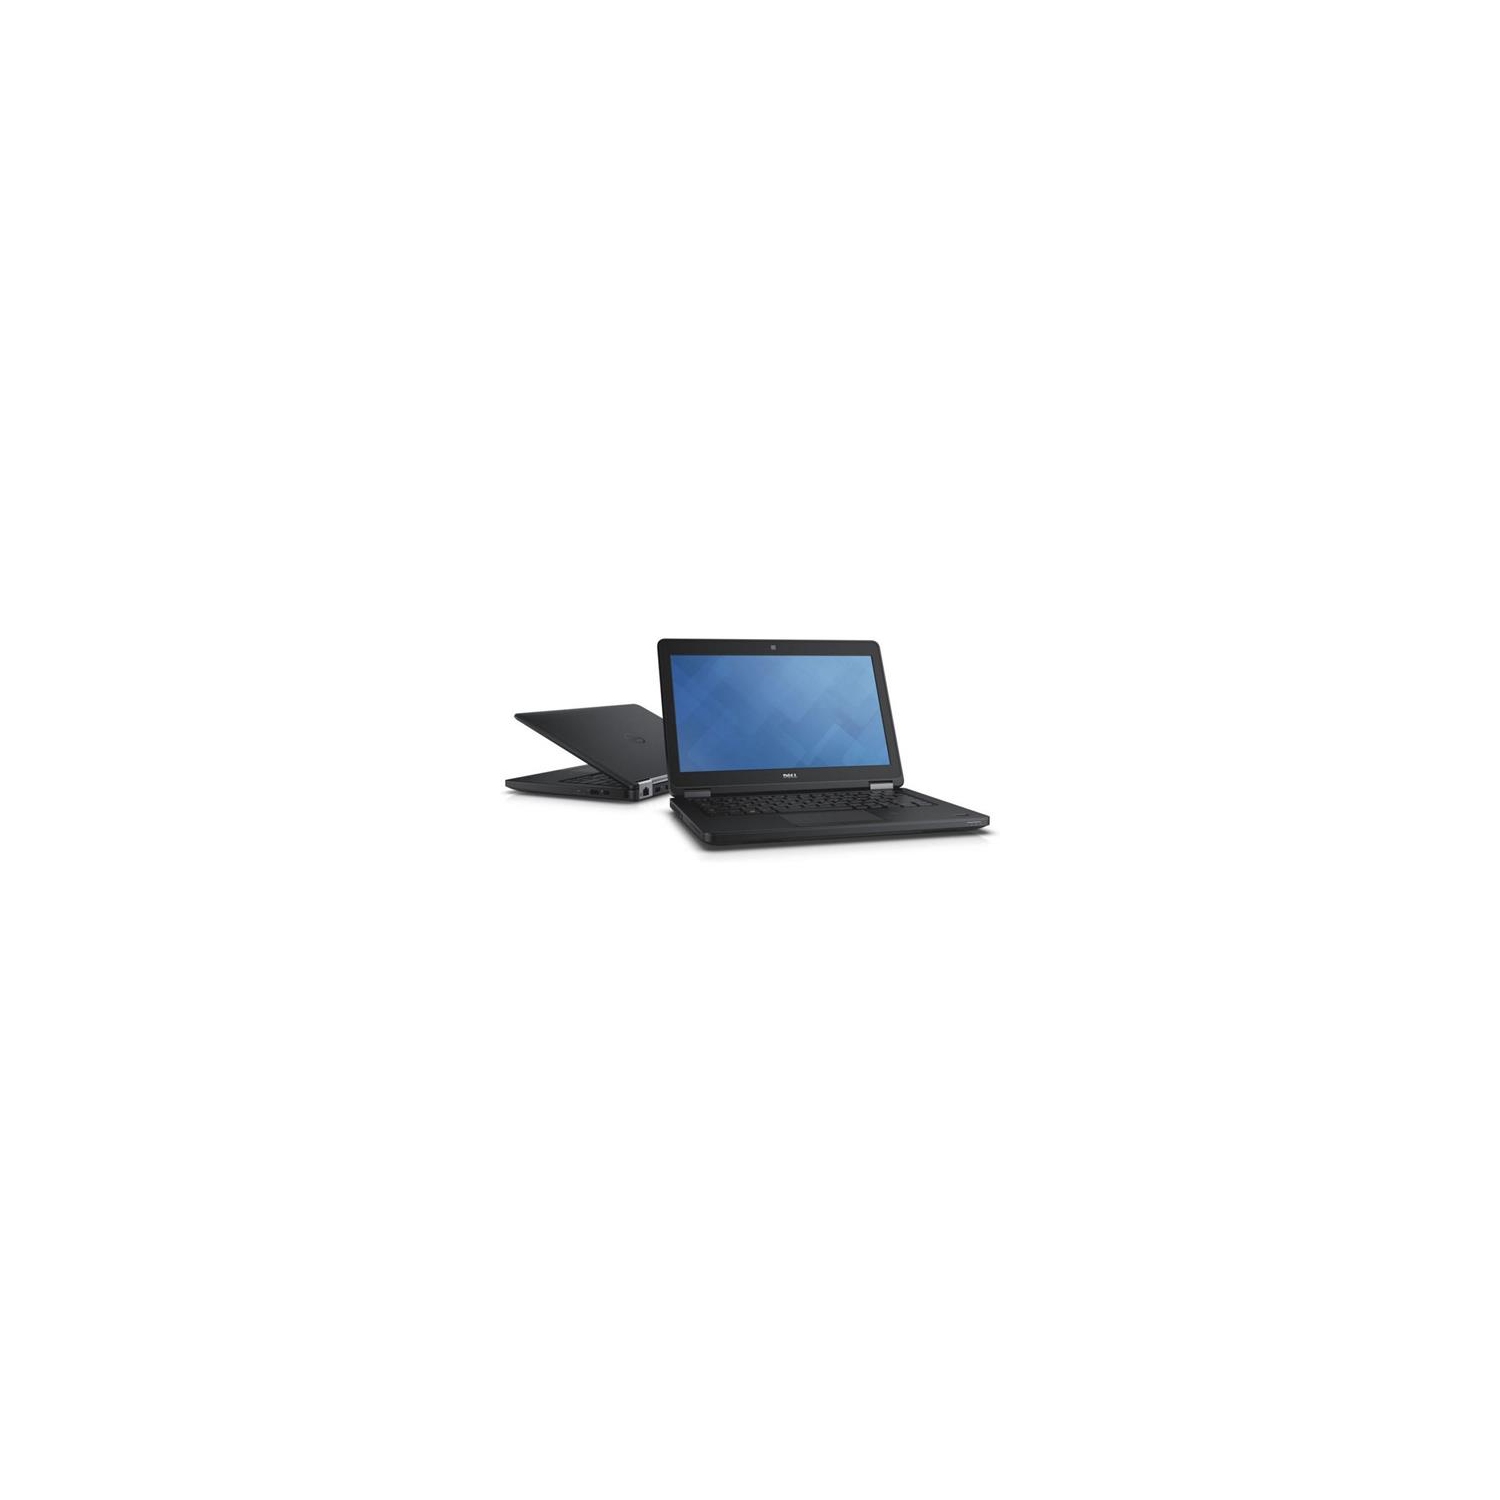 Refurbished (Good) - Dell Latitude E5450 14" HD Laptop - Intel Core i5 5300u 2.9GHz, 8GB RAM, 500GB HDD - WEBCAM - Windows 10 Pro - - Black